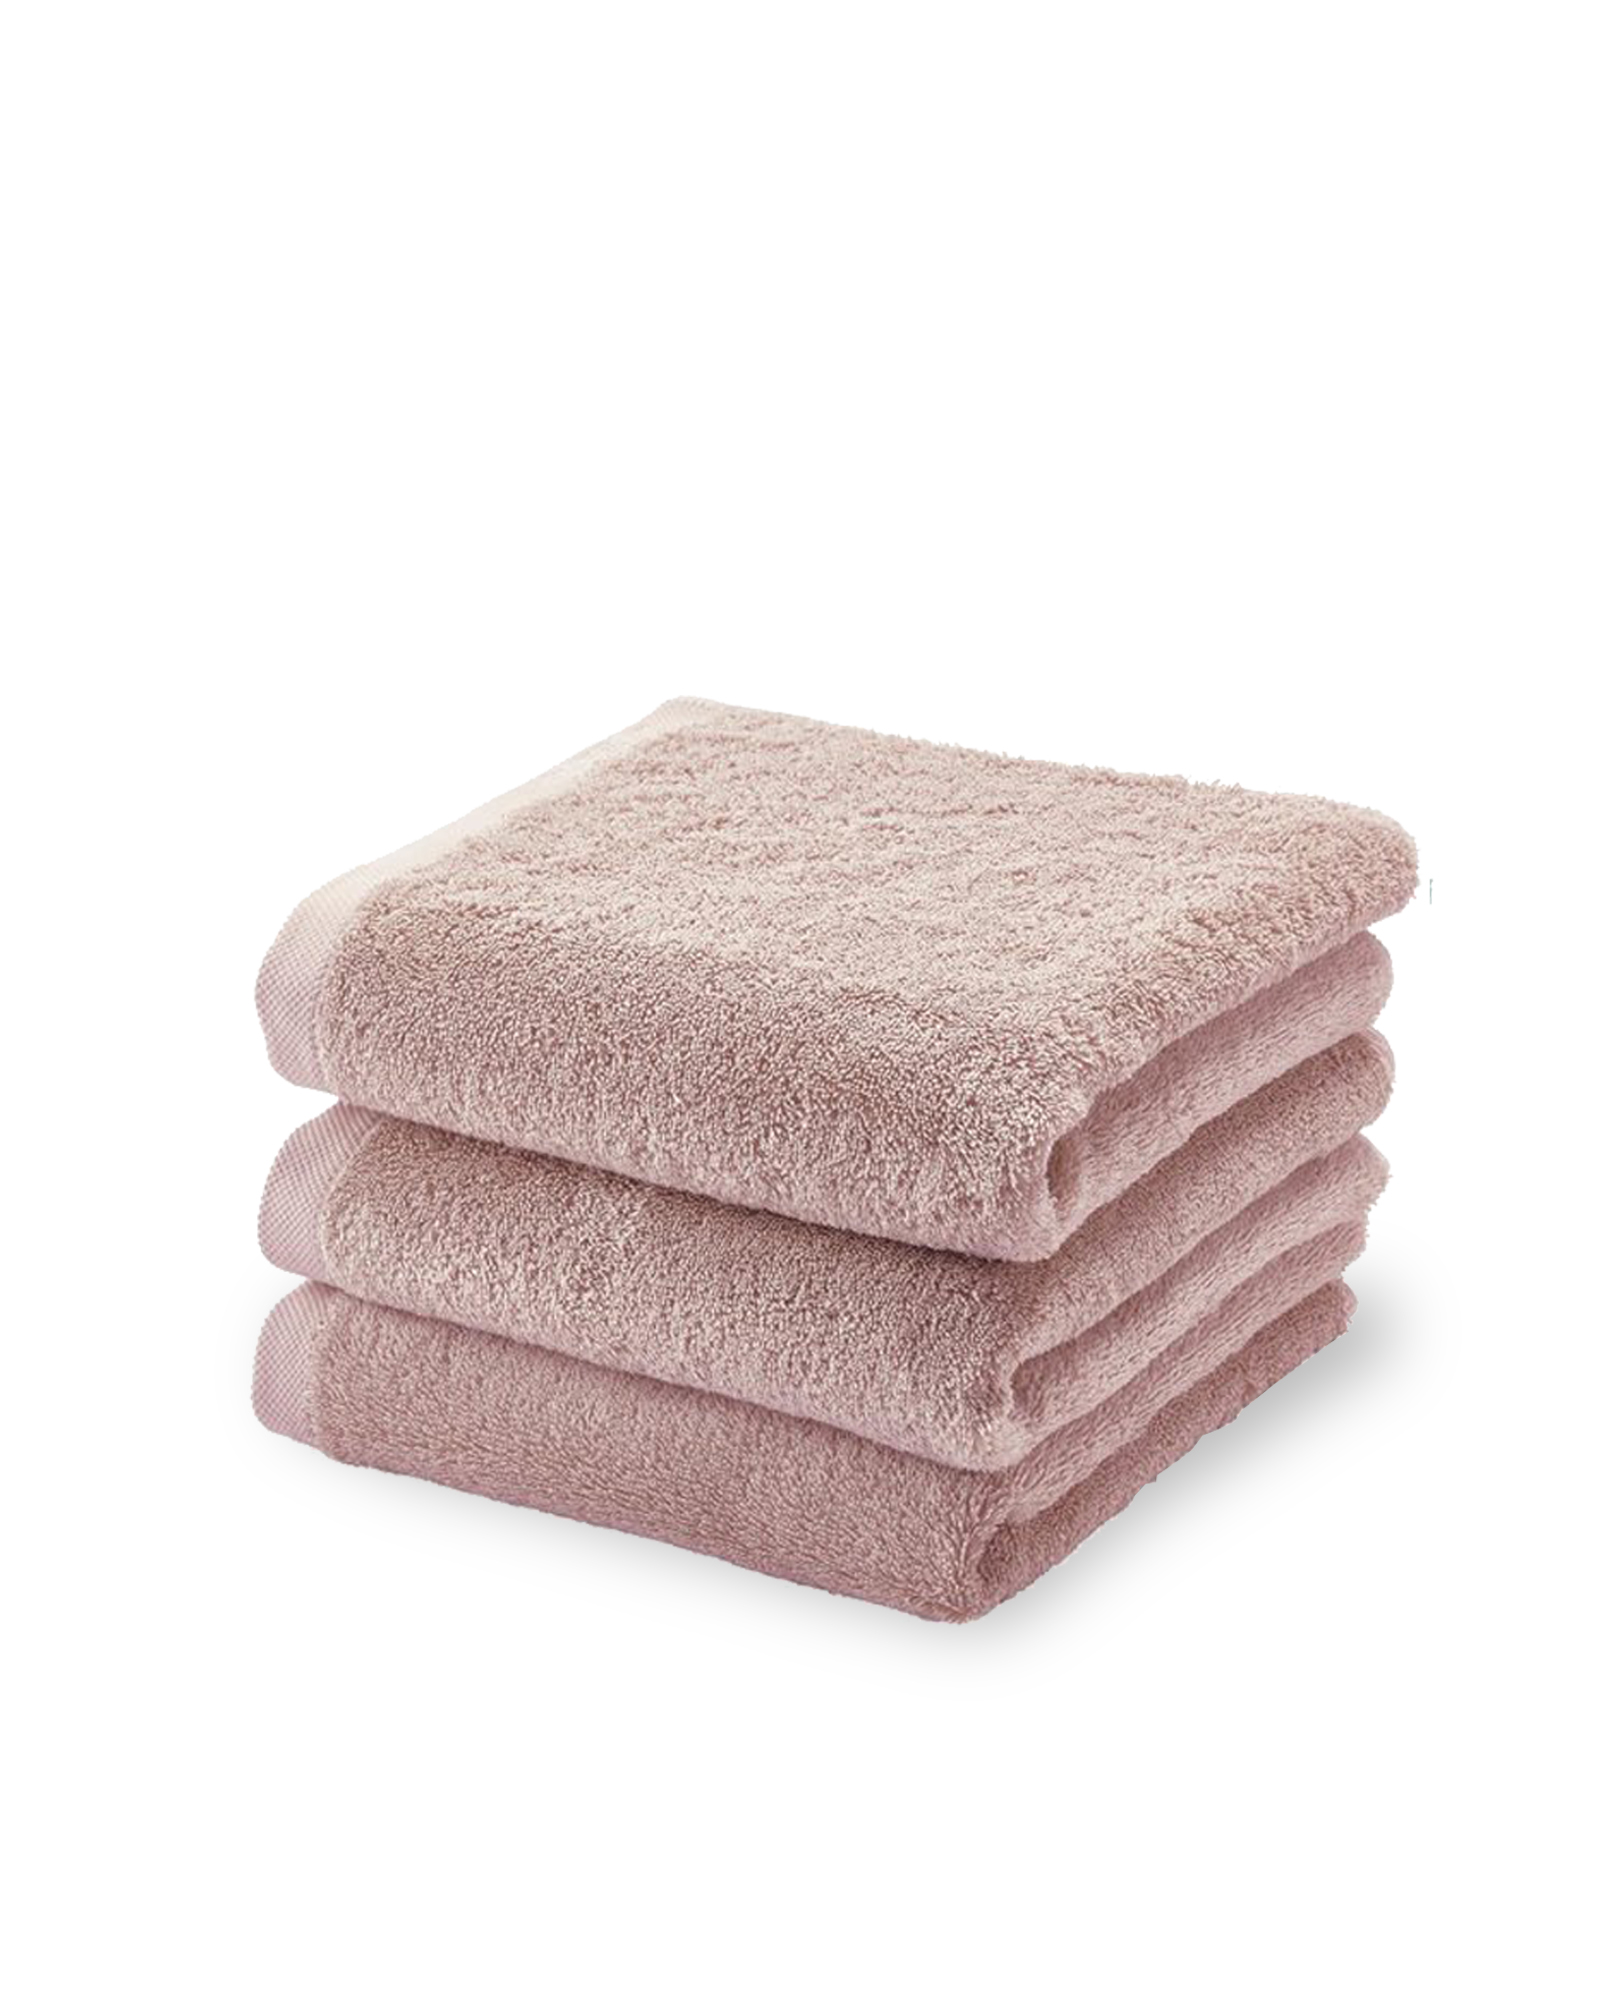 Aquanova - Guest towel LONDON Dusty Pink C.87 - 30x50 cm - Dusty Pink C.87